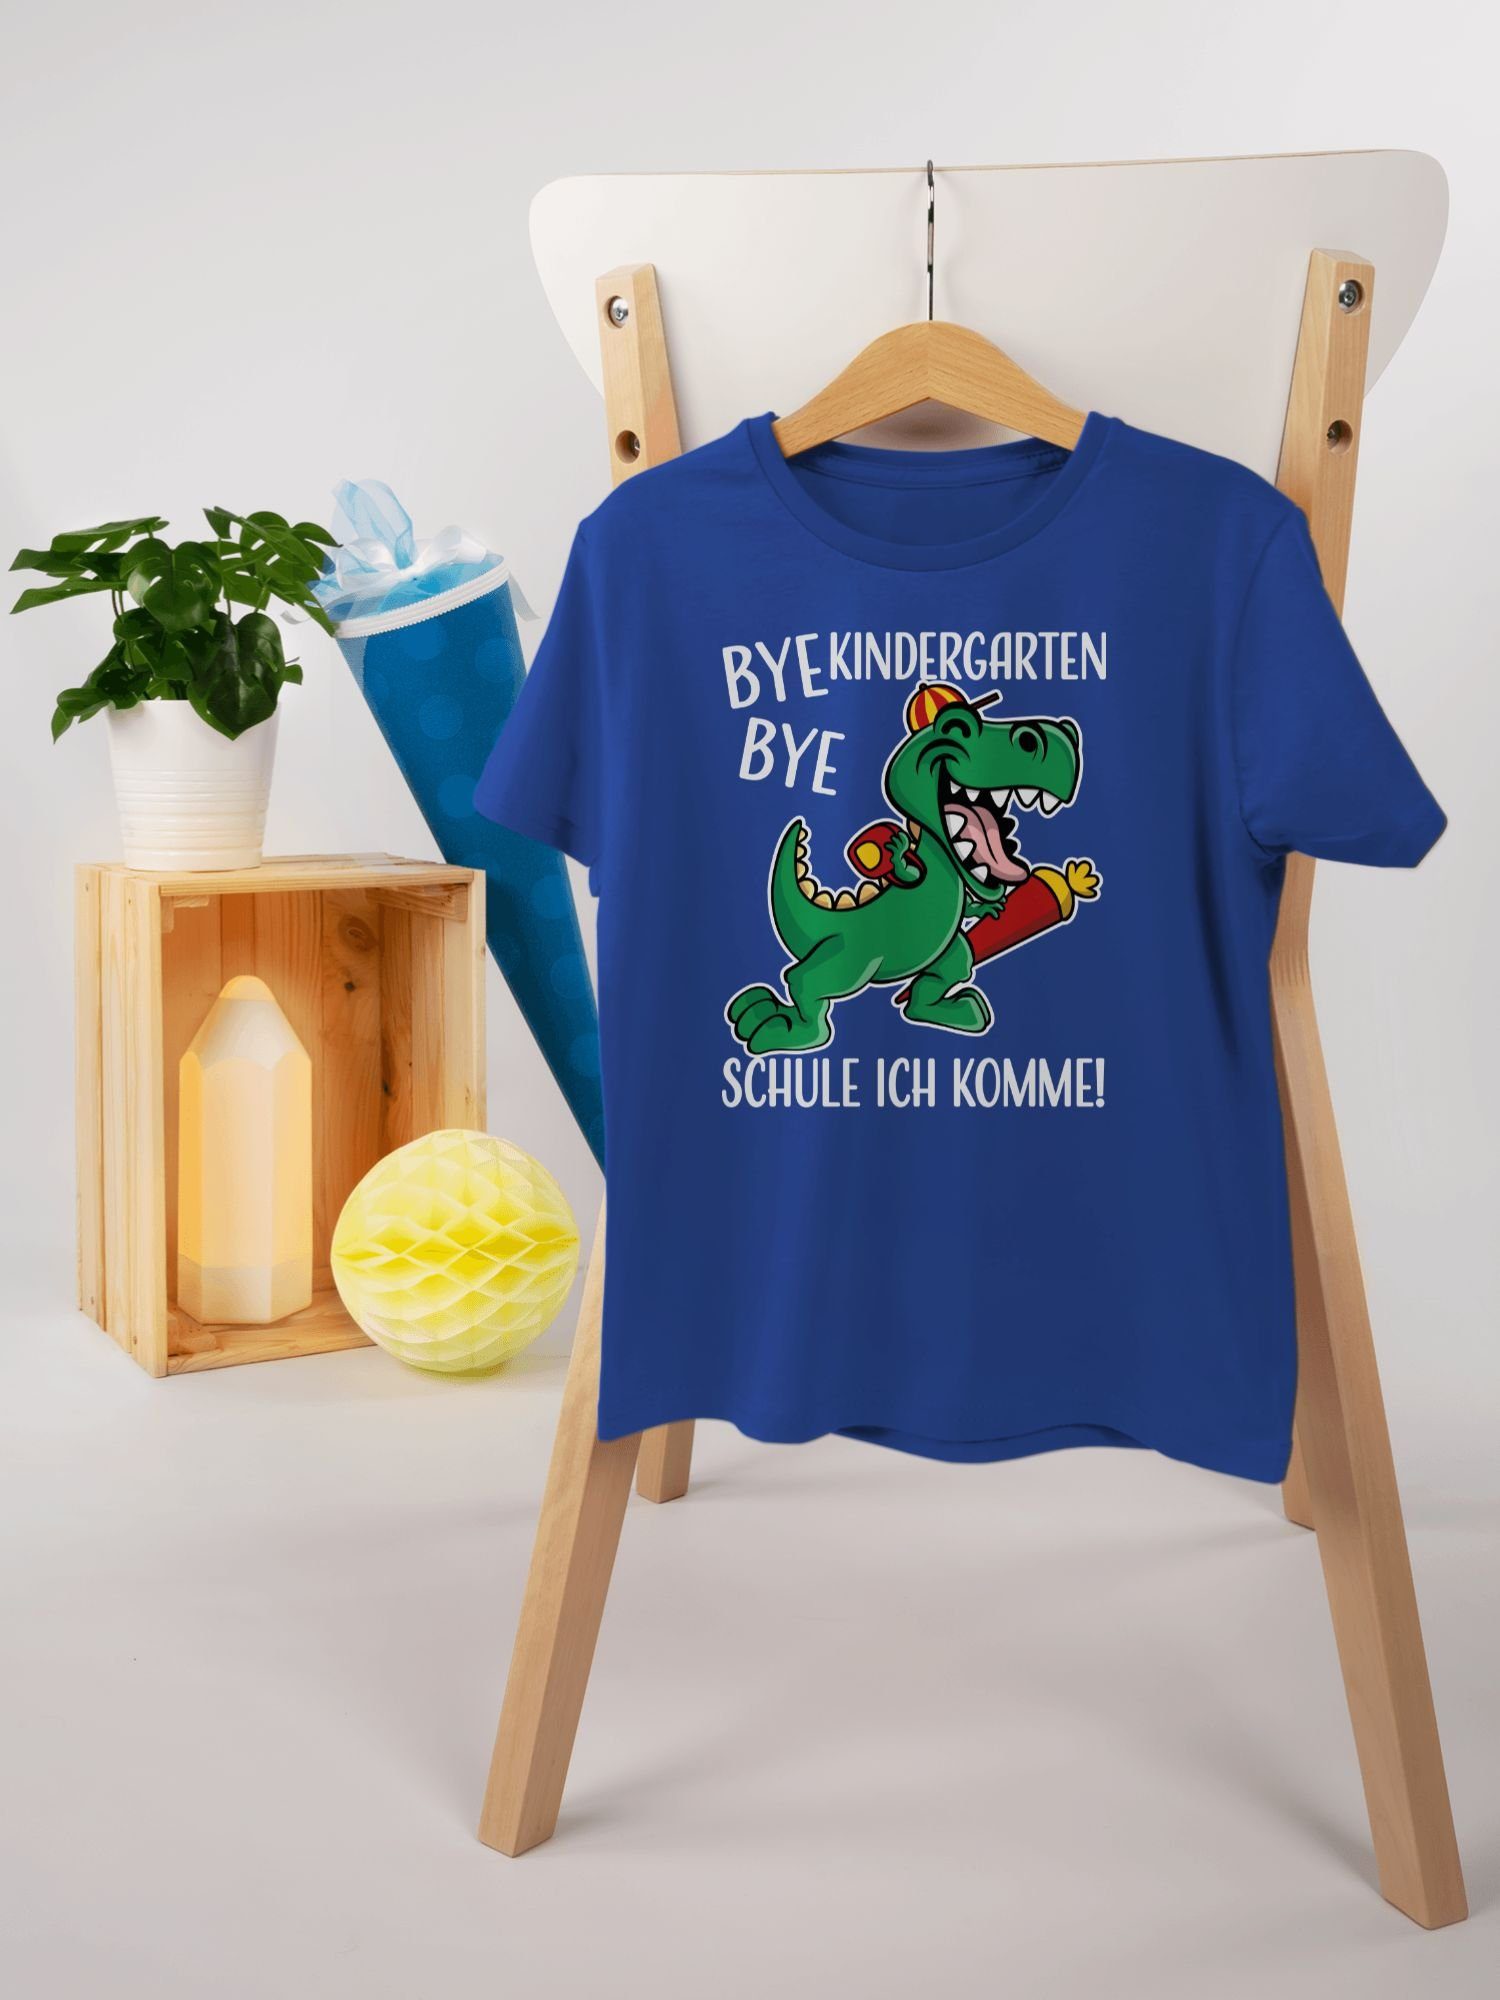 Schulanfang Geschenke Bye Junge Shirtracer Kindergarten 2 Bye Einschulung T-Shirt Dinosaurier Royalblau